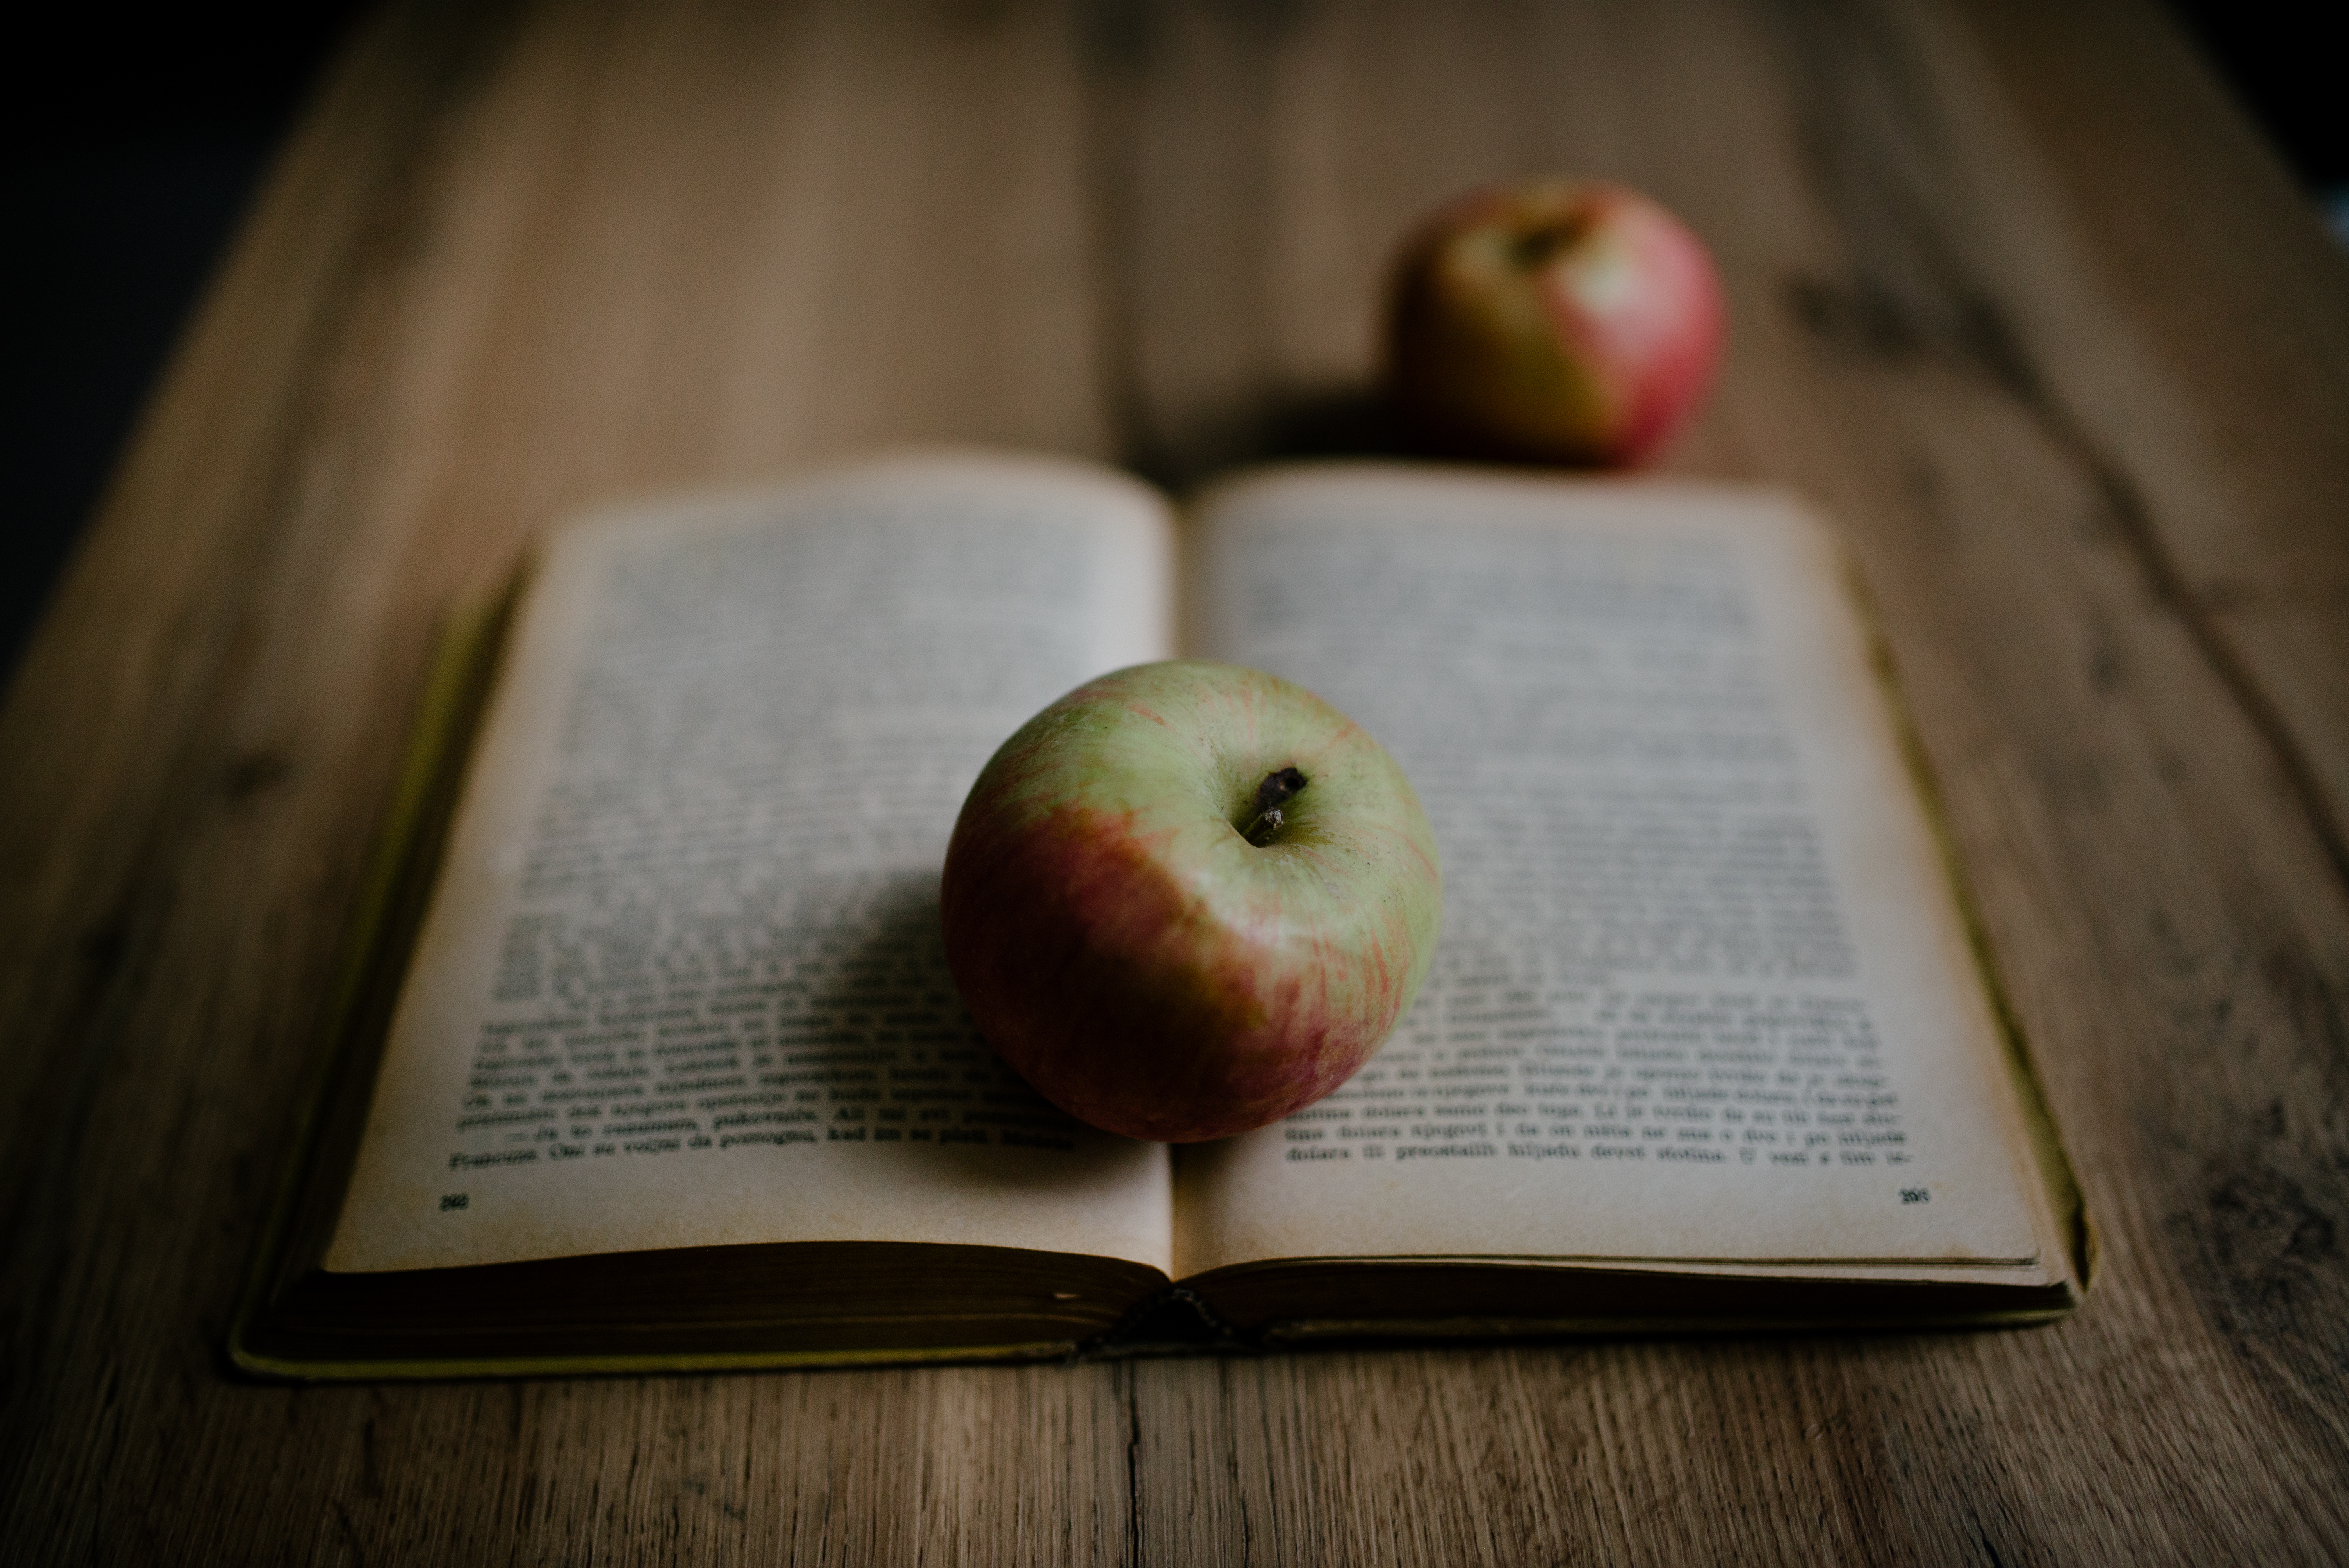 apple, miscellanea, miscellaneous, fruit, book, ripe